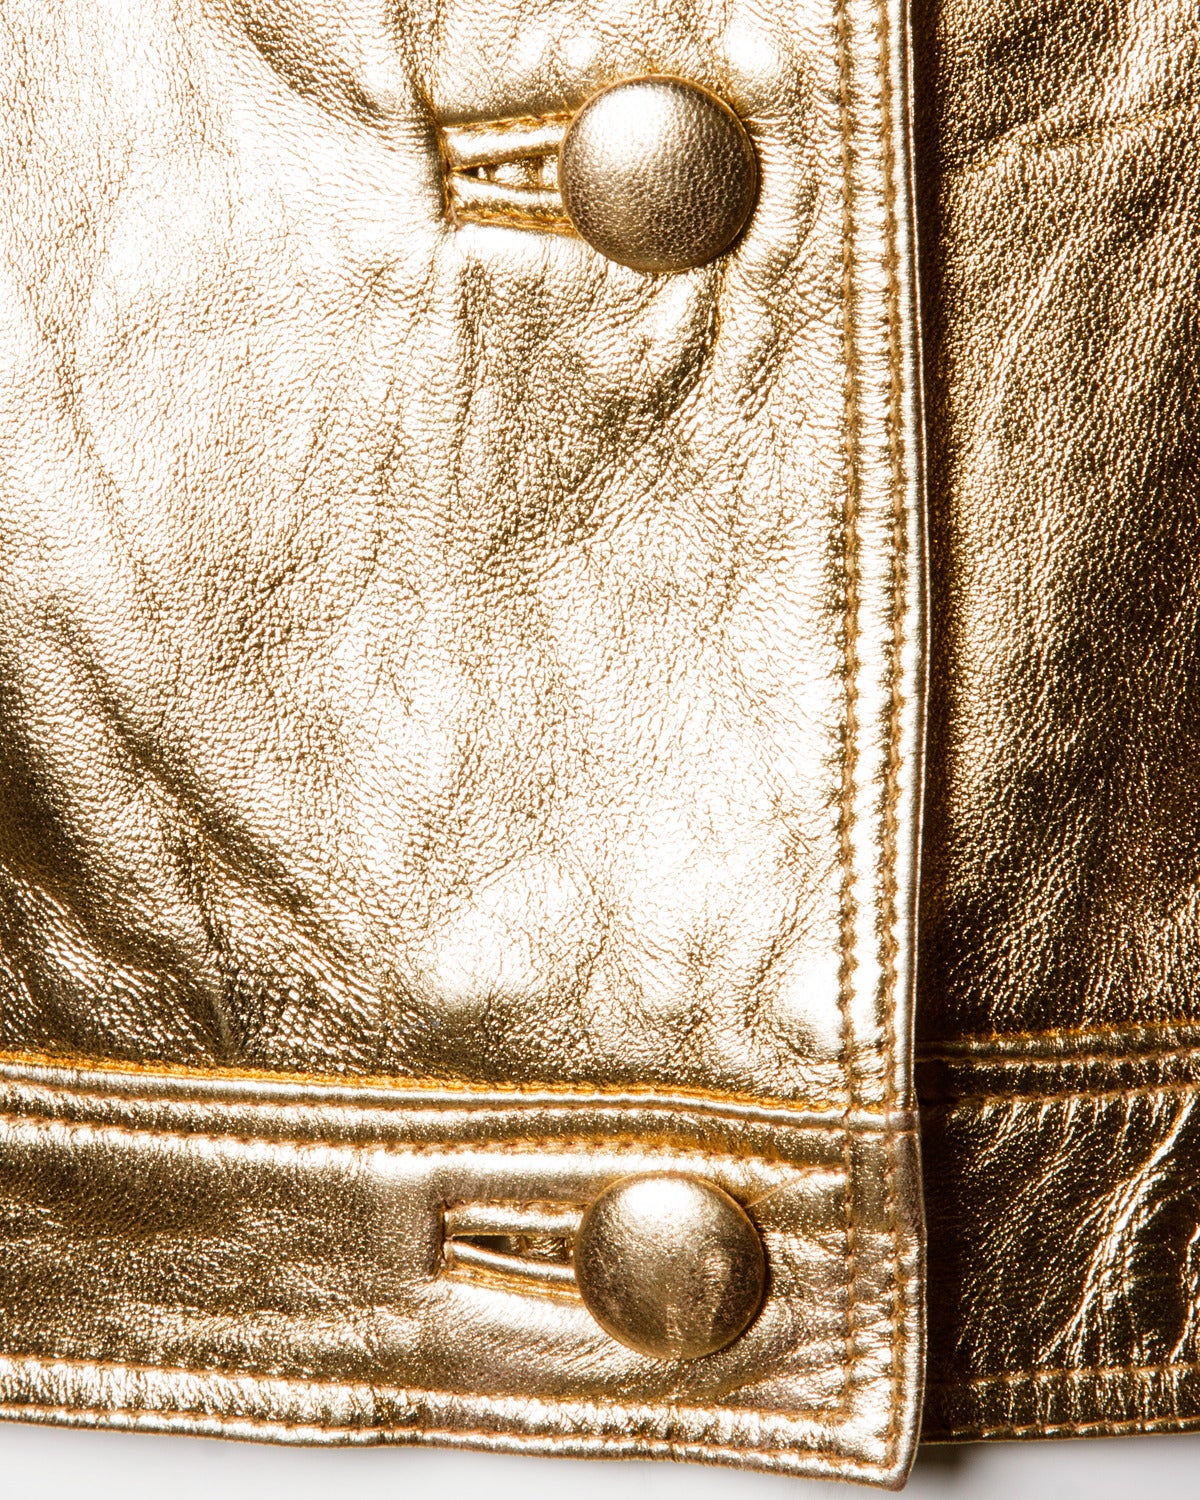 Women's Lillie Rubin Vintage 1980s Metallic Gold Leather Jacket